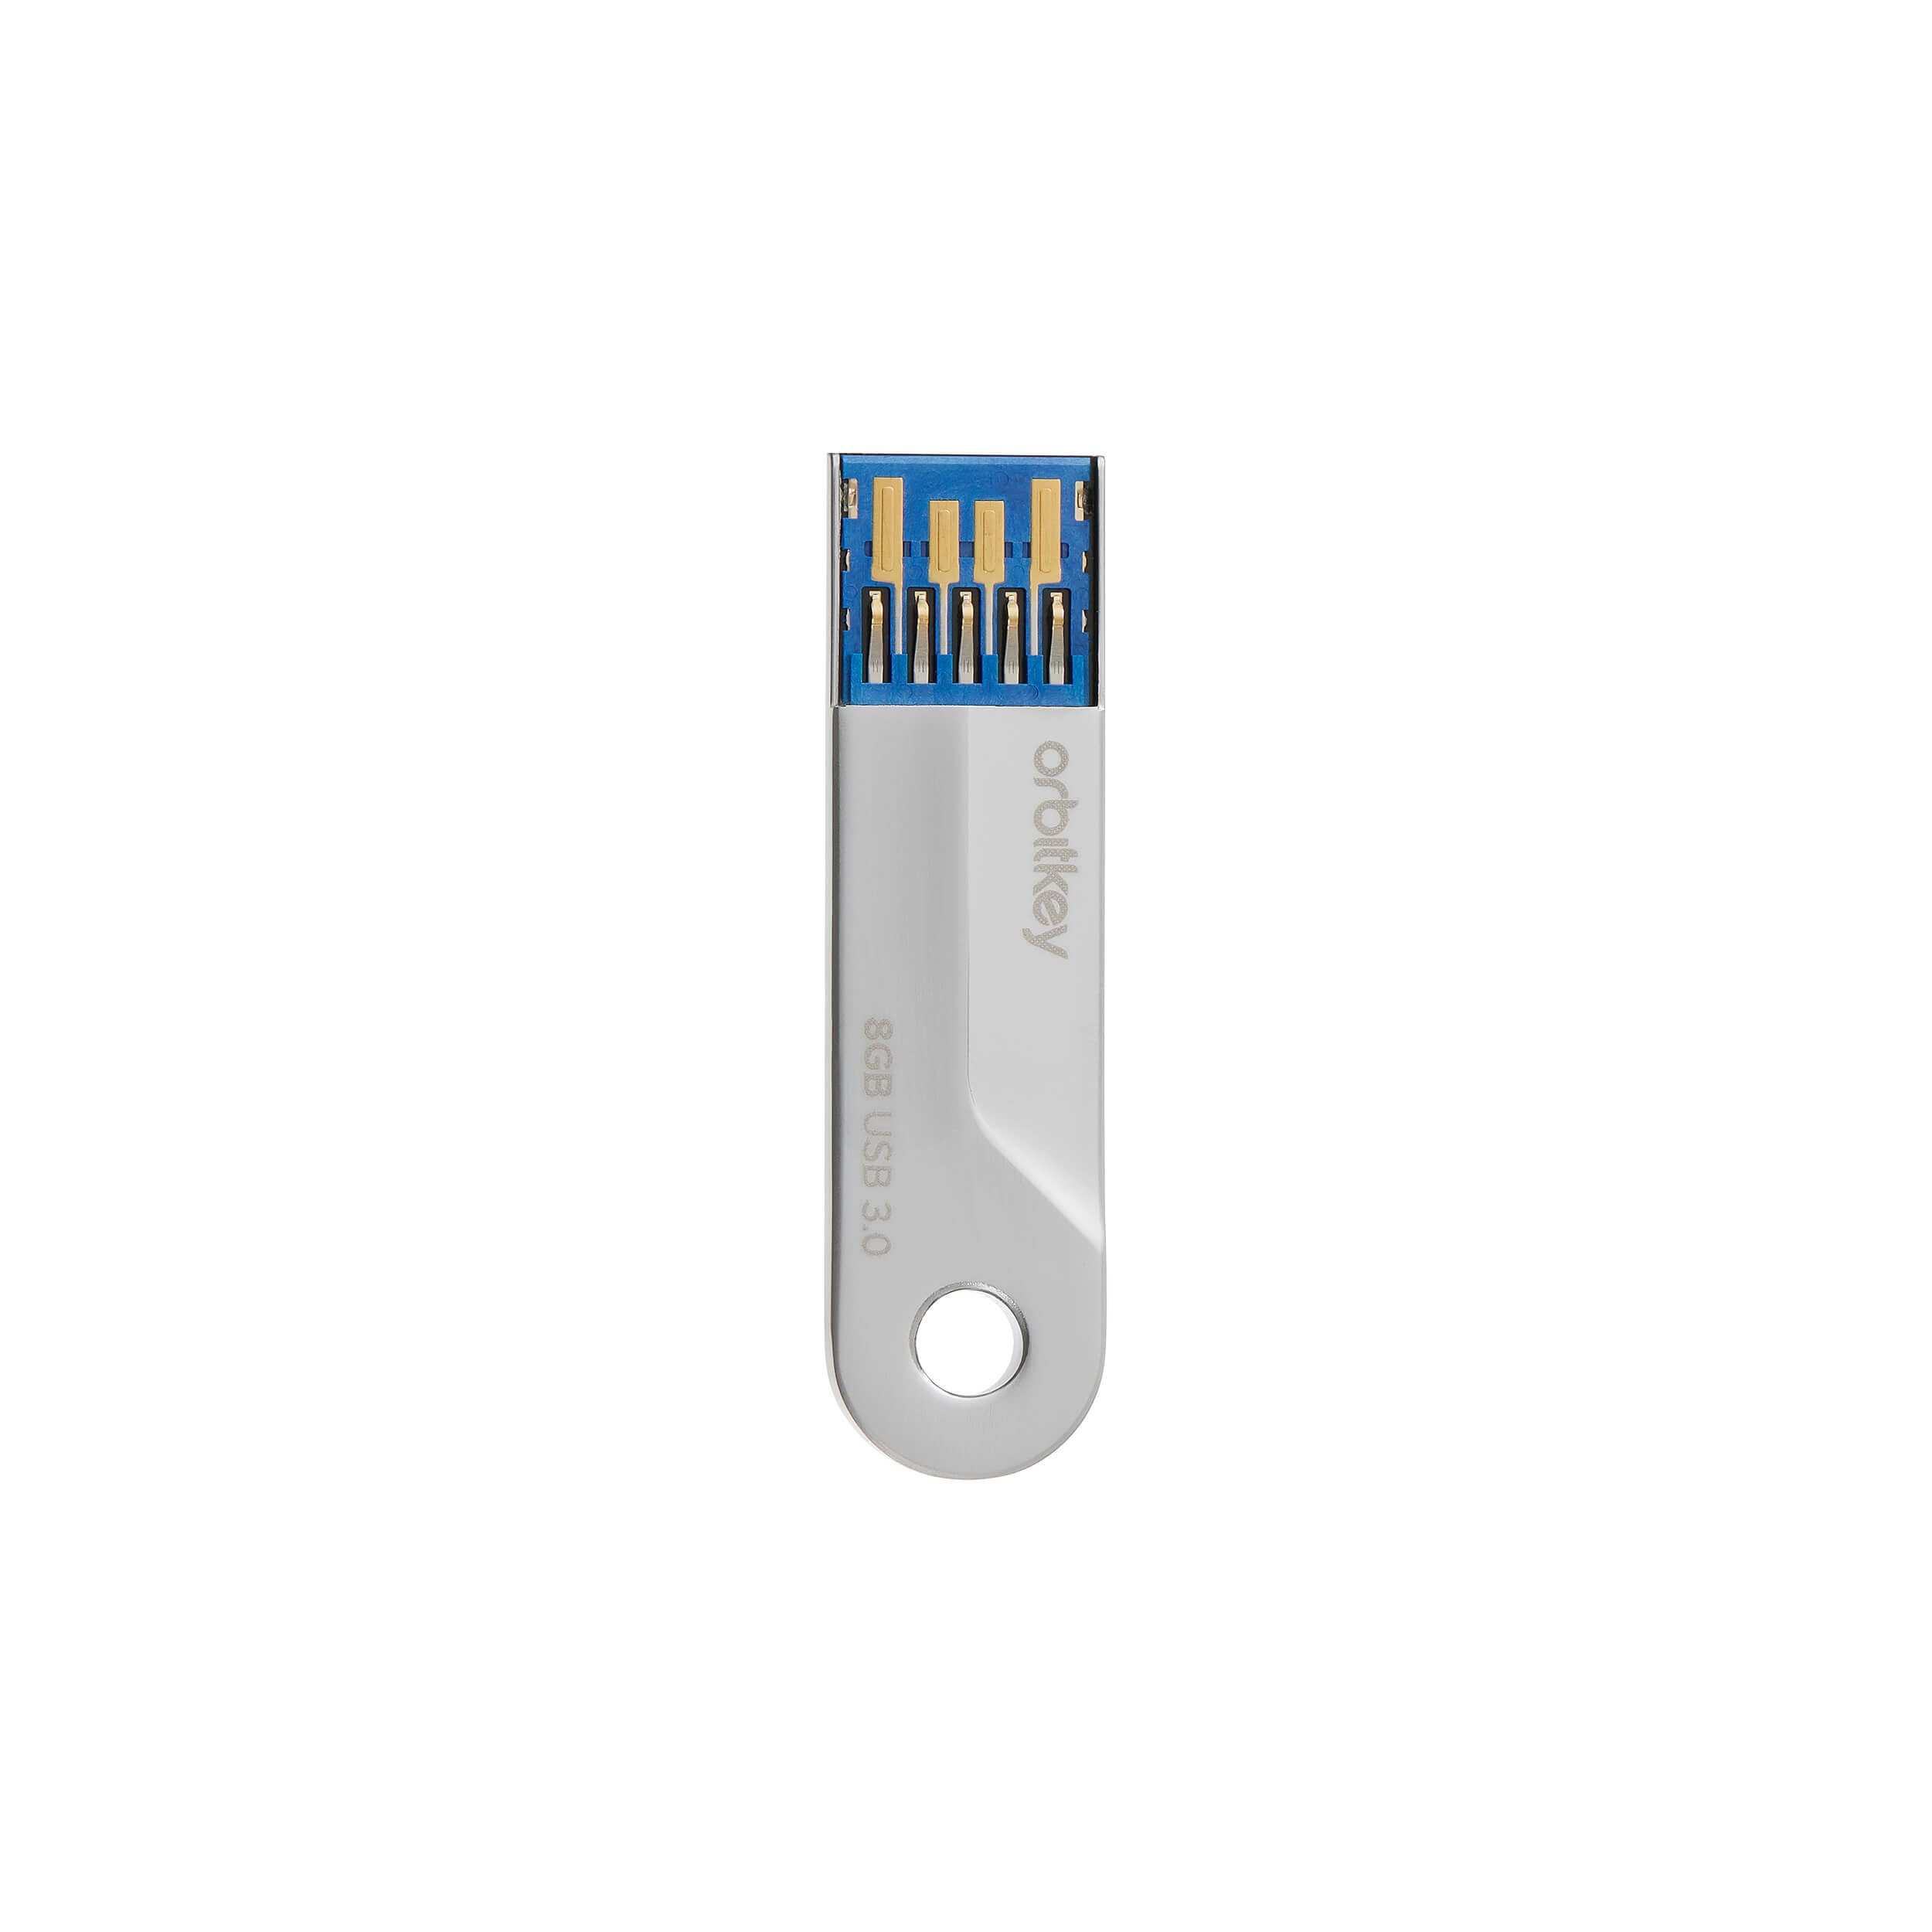 Orbity Key USB- 8GB